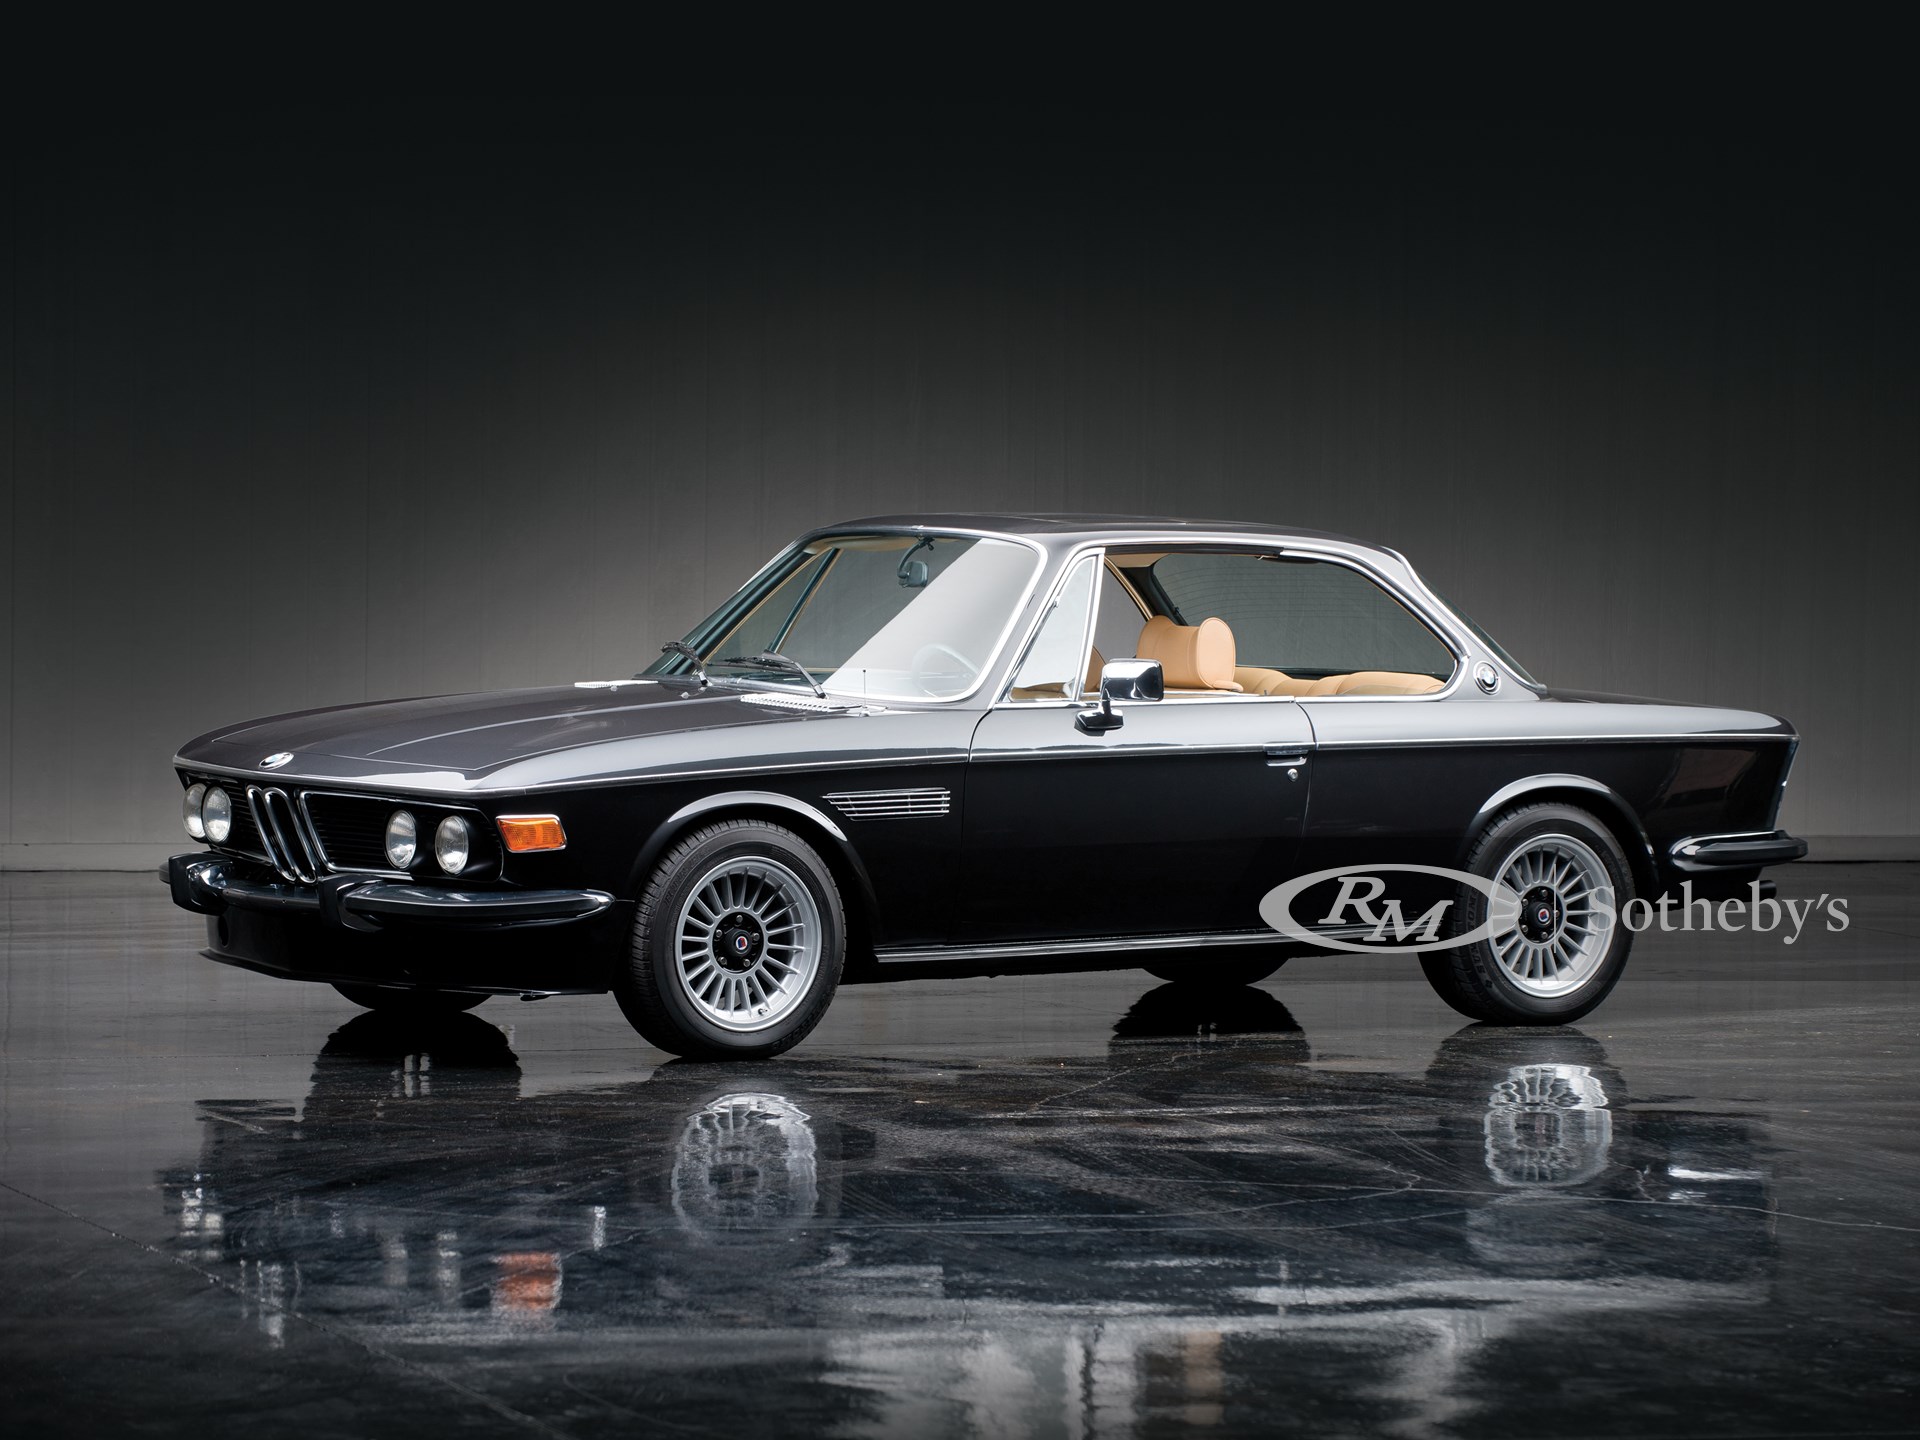 1974 BMW 3.0 CS The Don Davis Collection 2013 RM Auctions